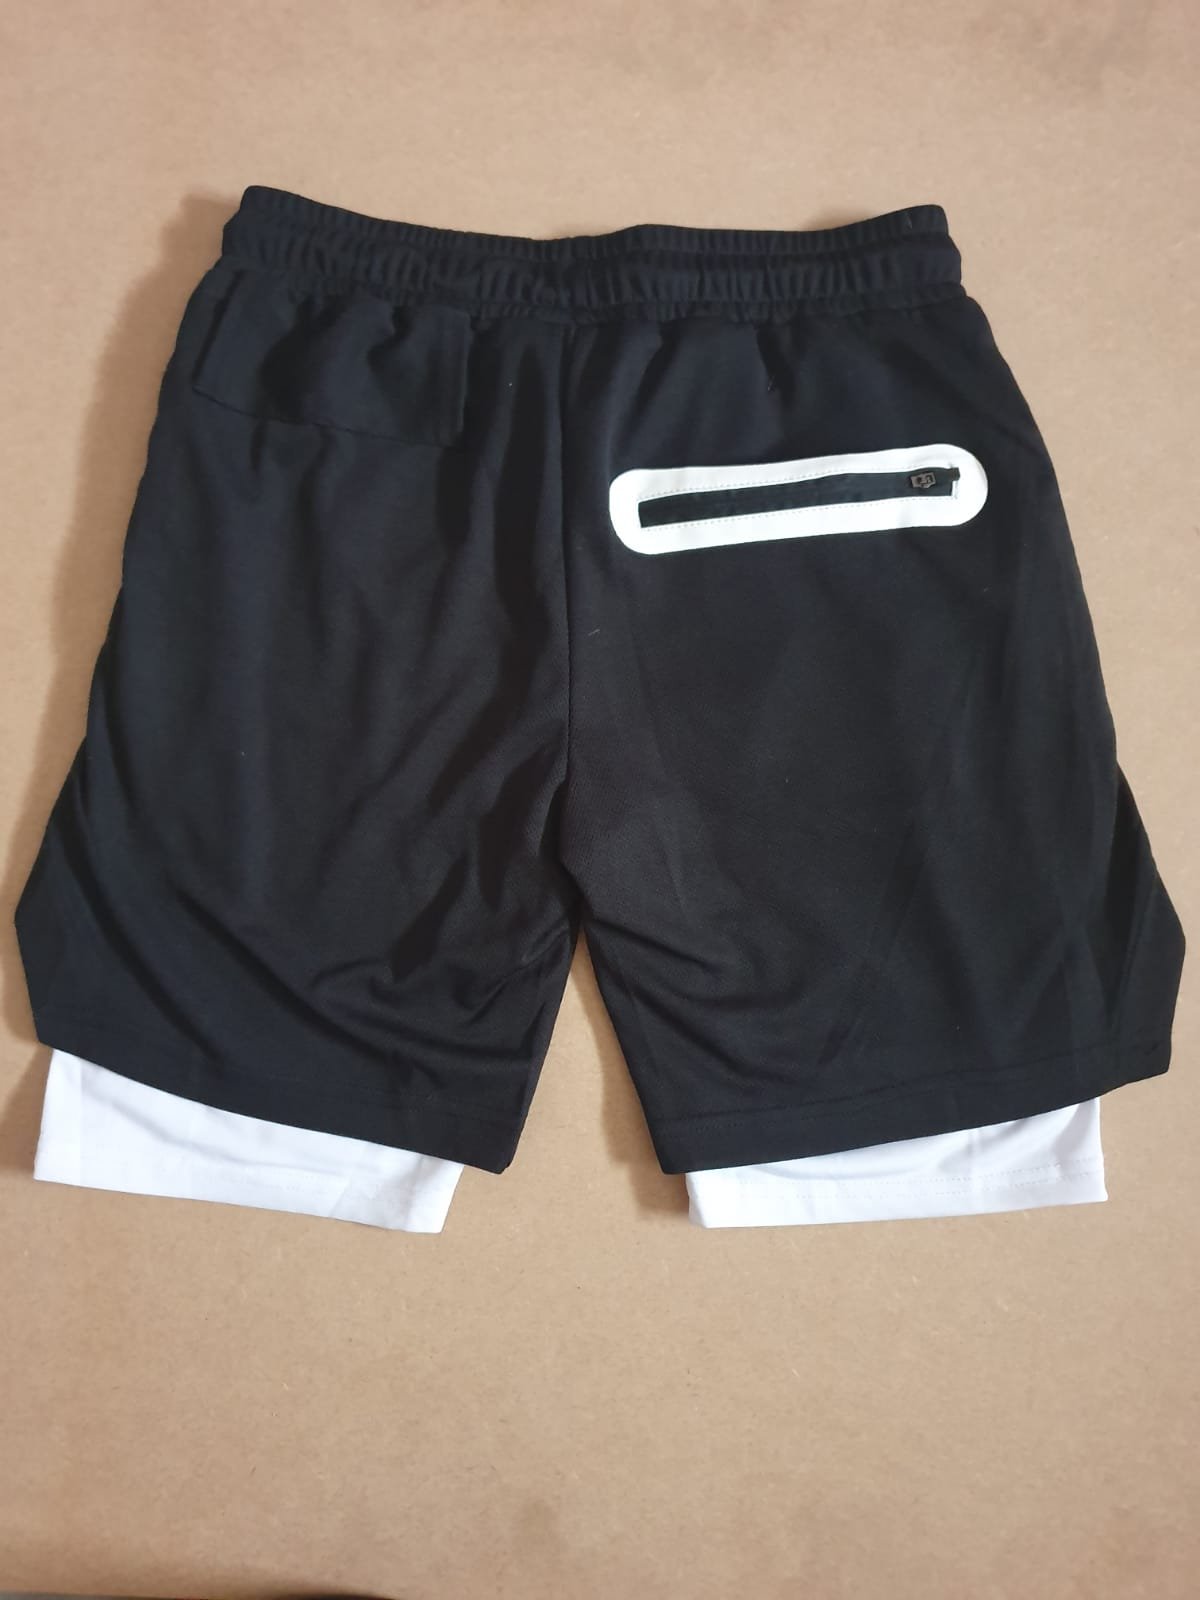 Macro Physique 2 in 1 pocket shorts | Macro Physique